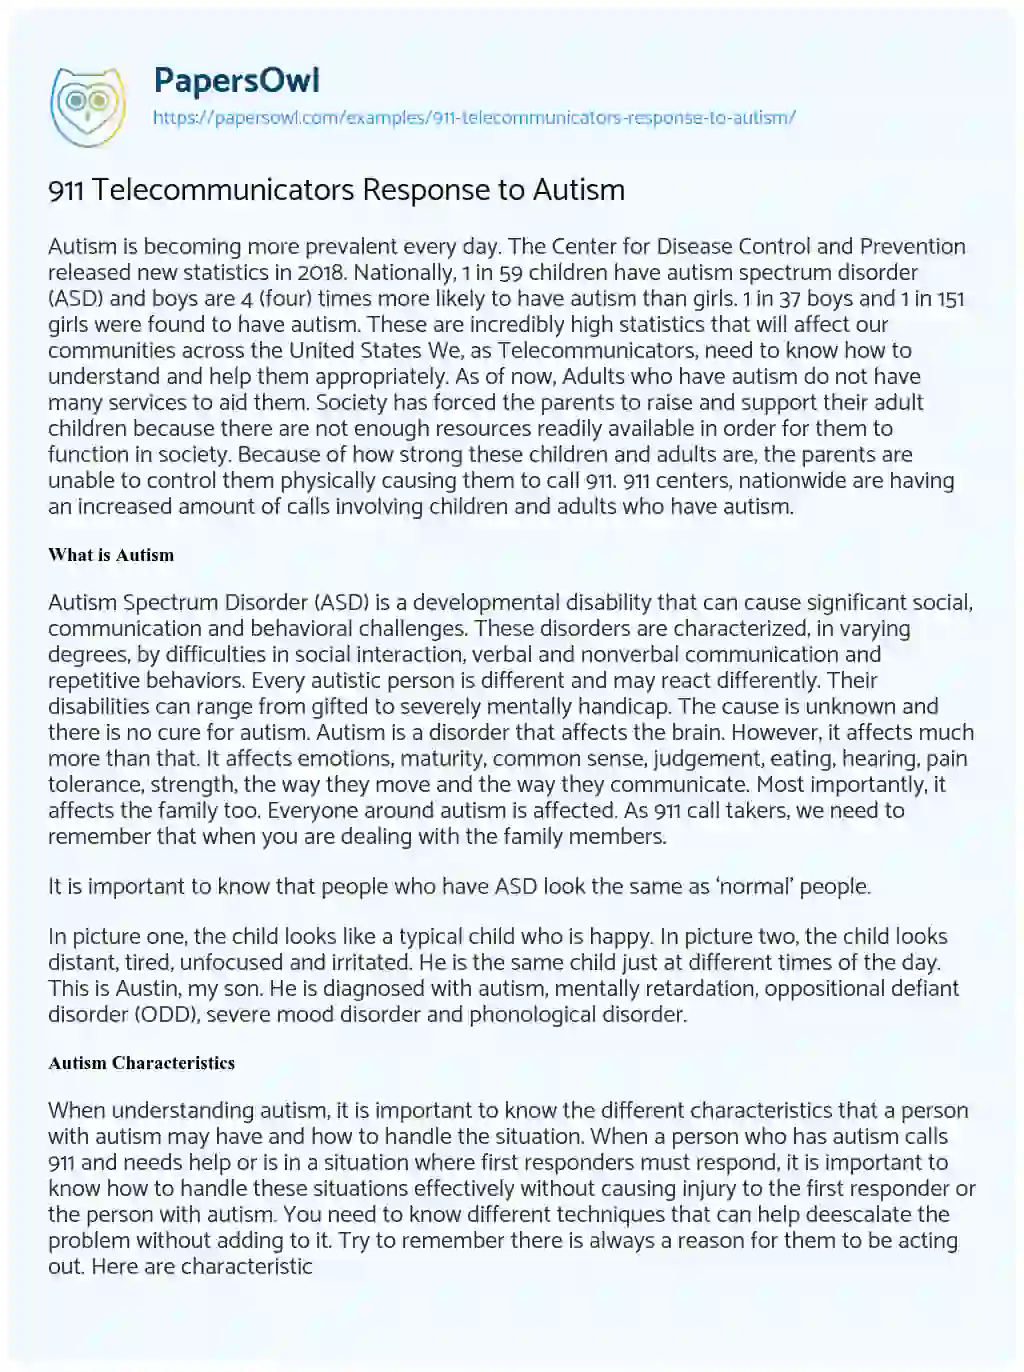 Essay on 911 Telecommunicators Response to Autism